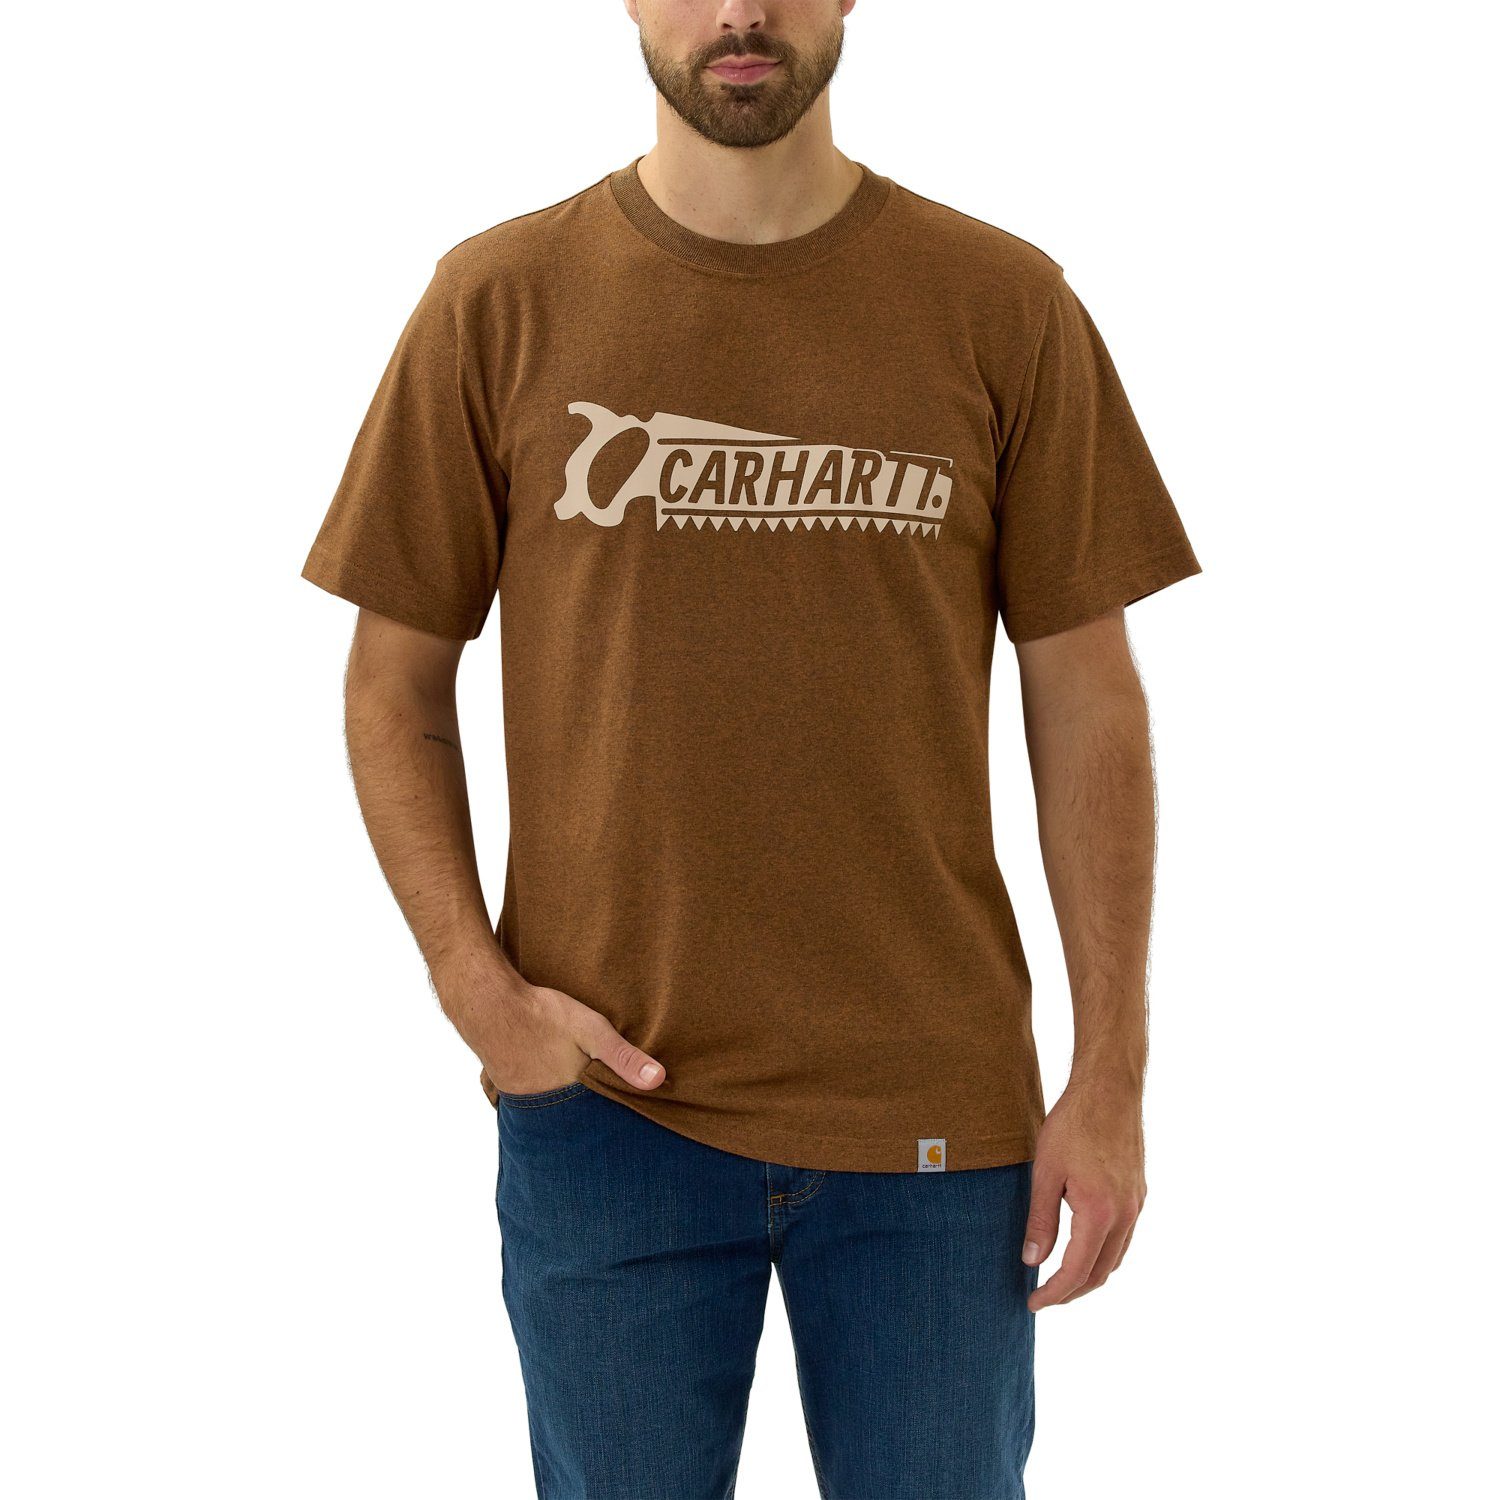 Carhartt T-Shirt Carhartt Herren T-Shirt Saw Graphic Adult oiled walnut heather